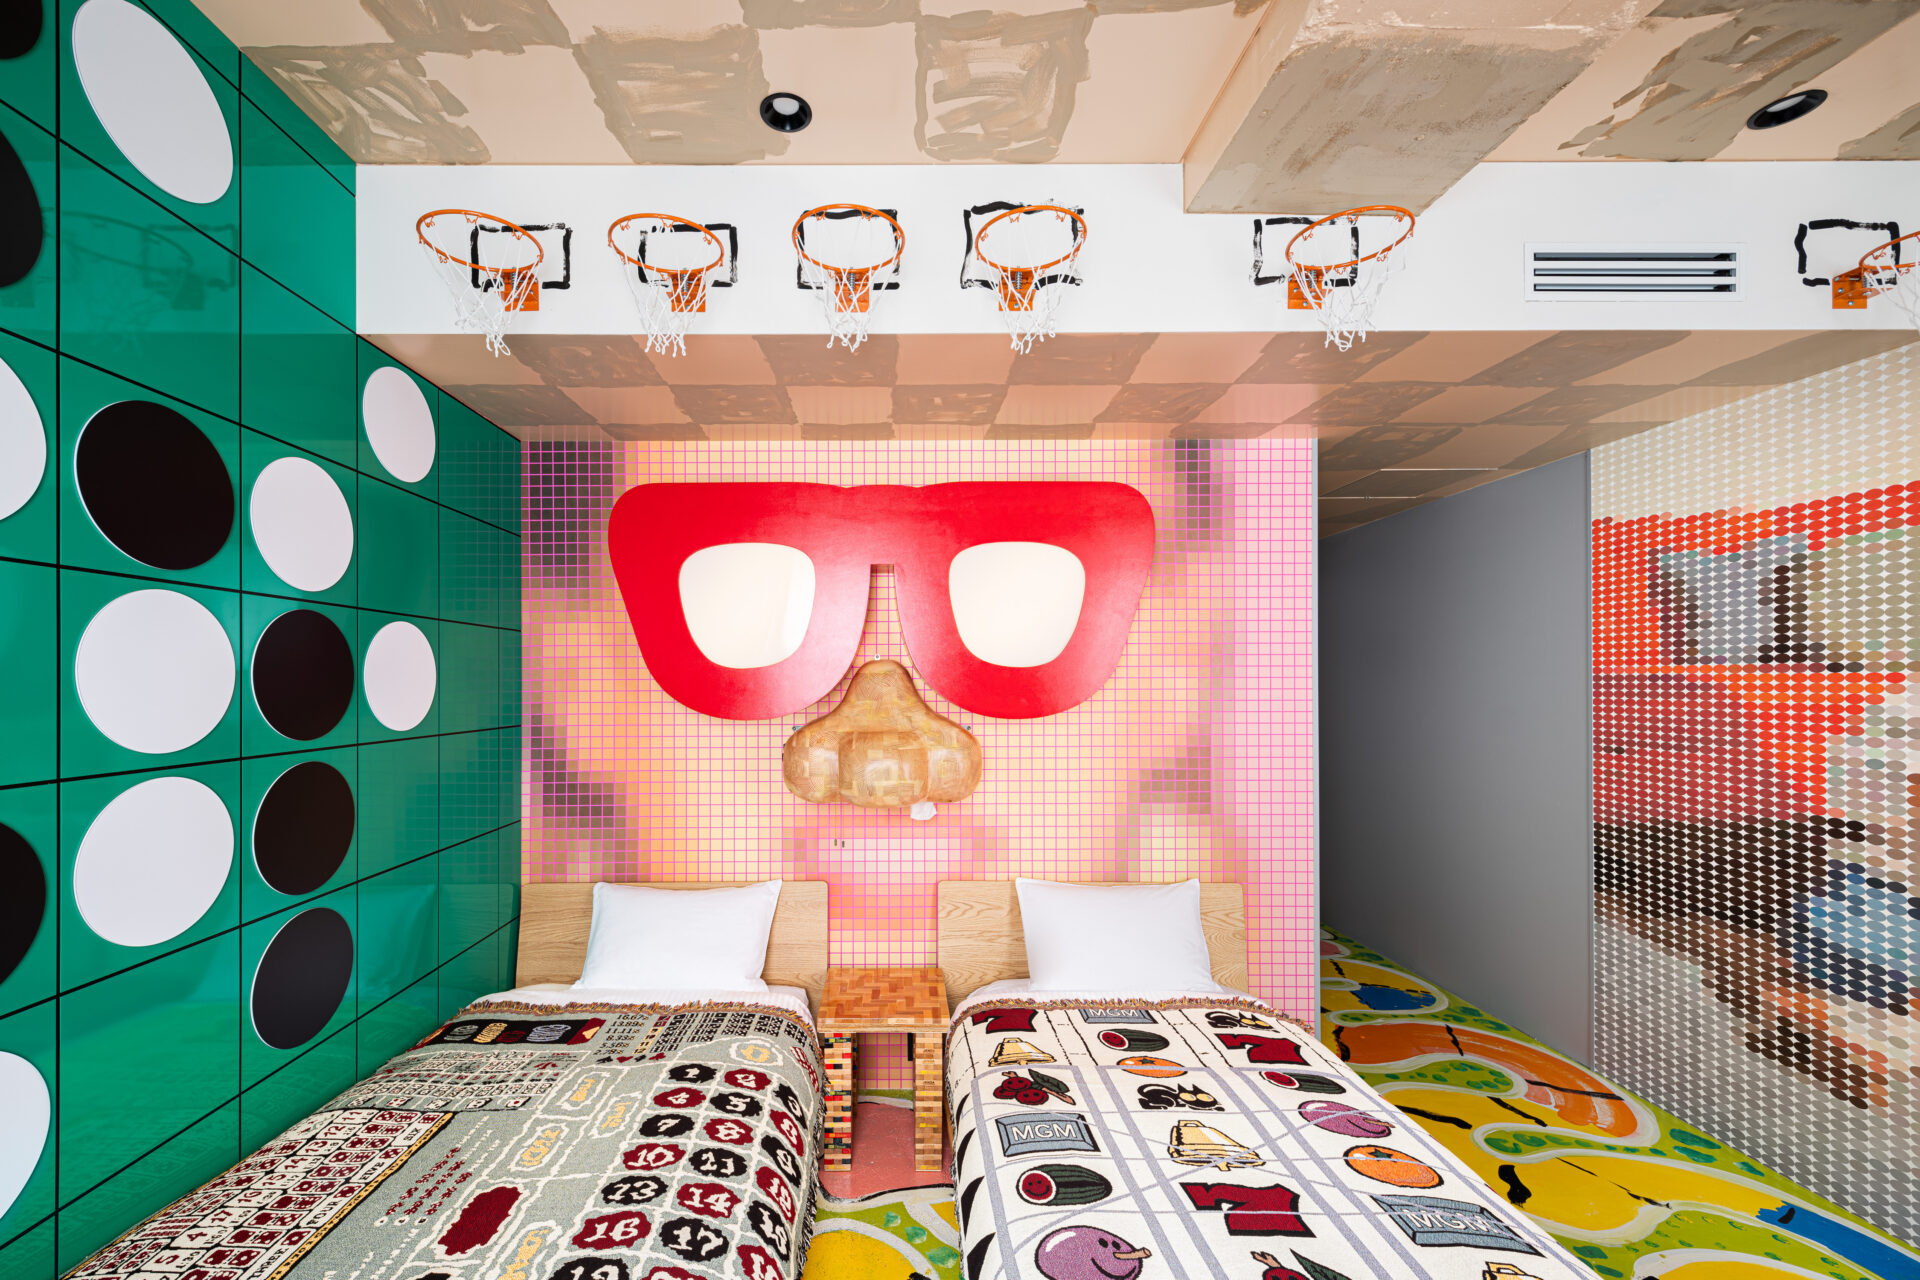 bna-wall-art-hotel-game-room-theme